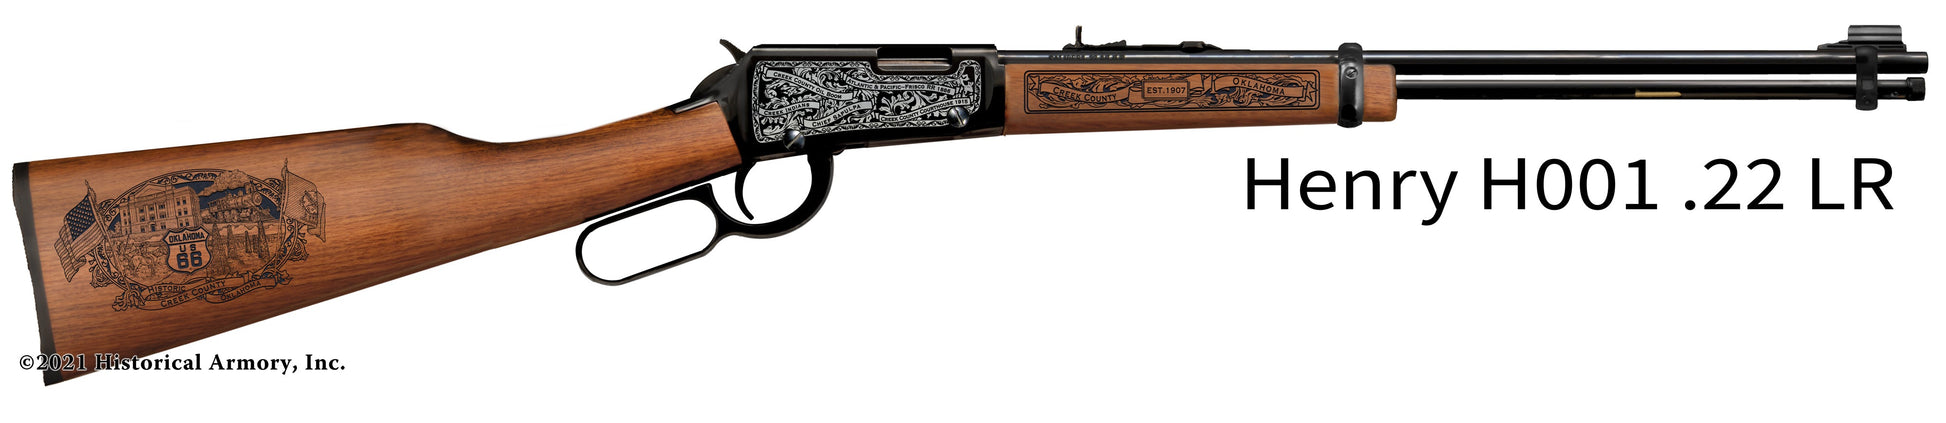 Creek County Oklahoma Engraved Henry H001 Rifle